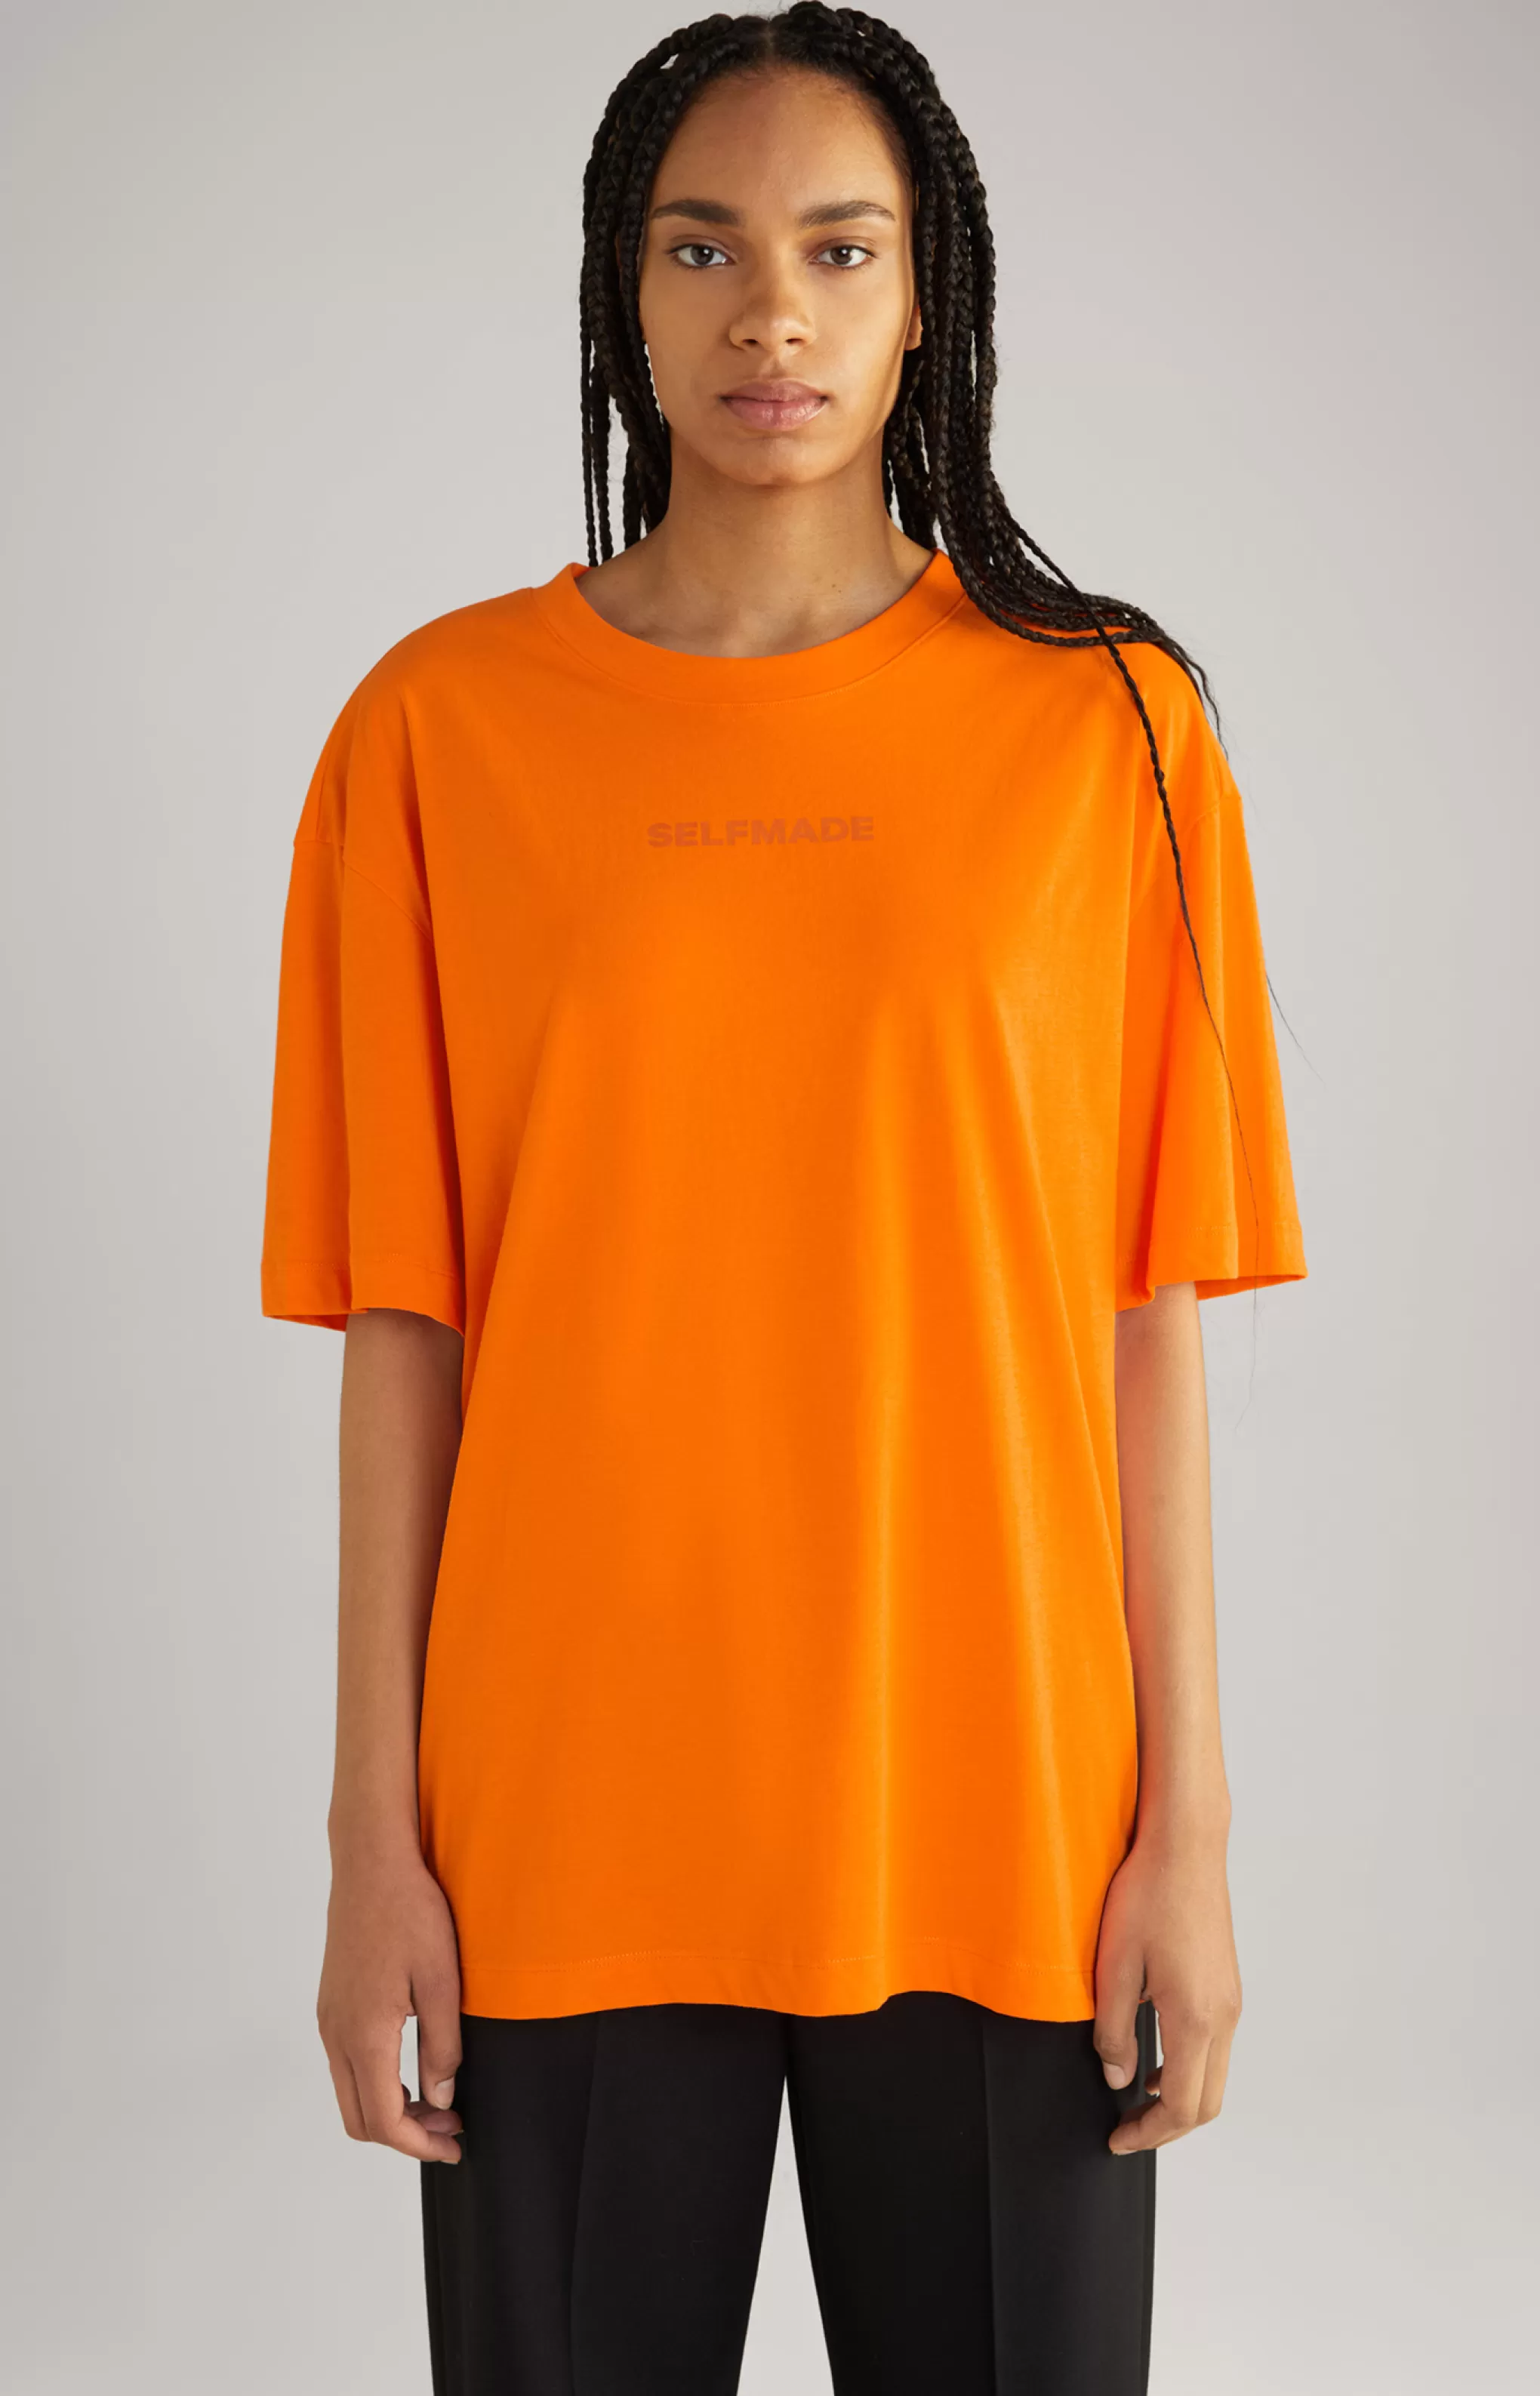 Shirts & Sweats | T-shirts*JOOP Shirts & Sweats | T-shirts Unisex Cotton T-Shirt in